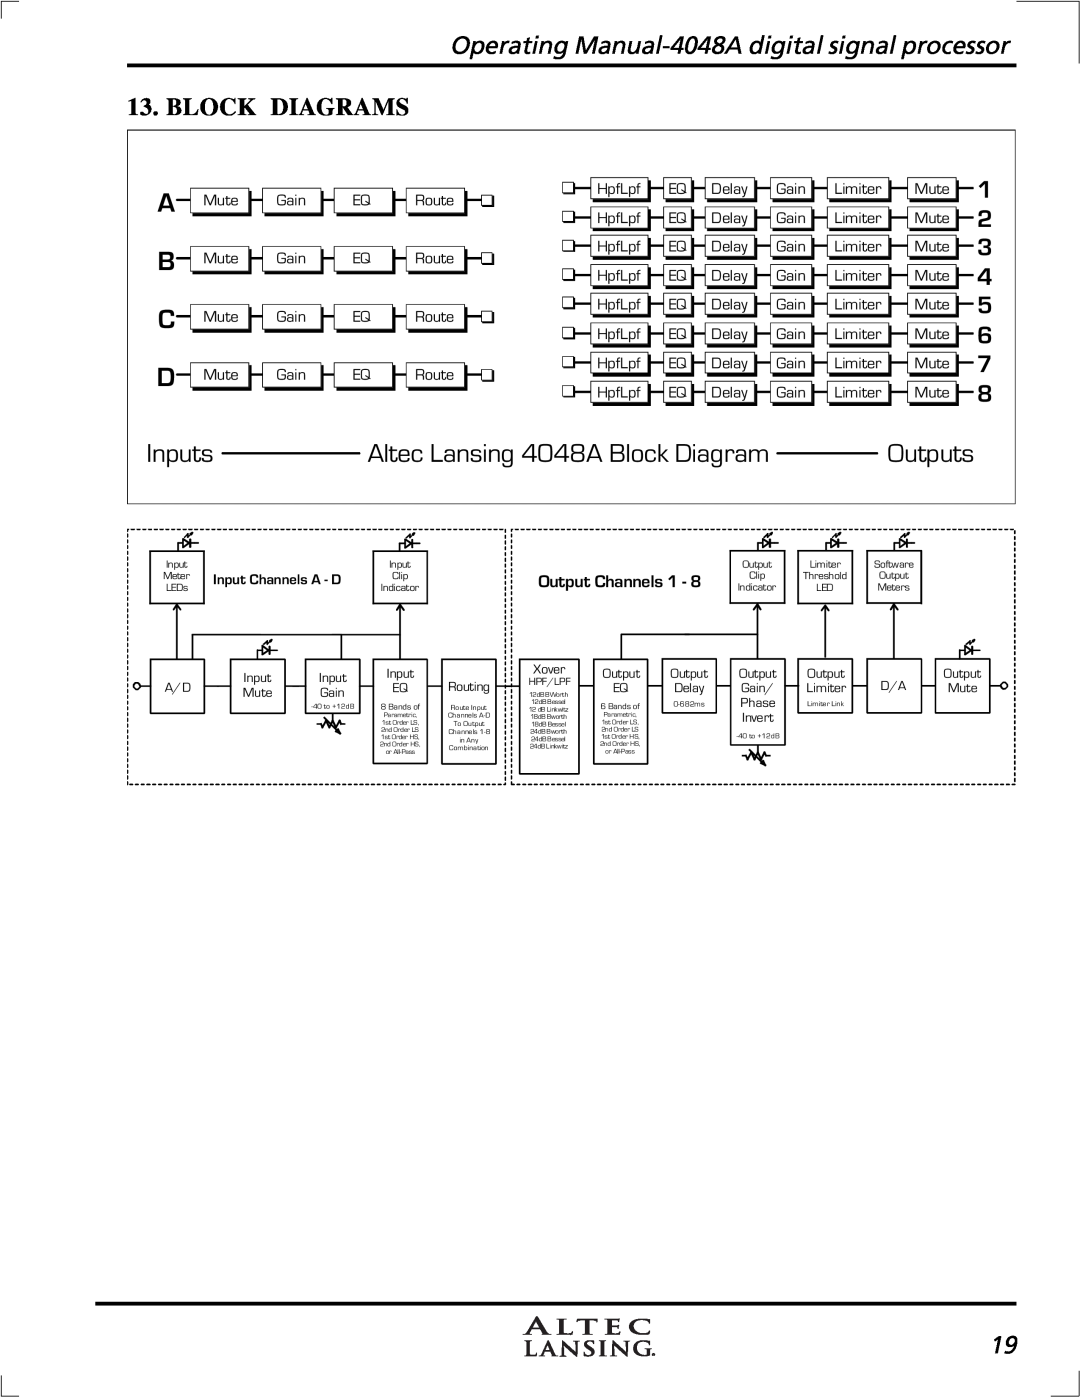 Altec Lansing 4948A manual Inputs, Altec Lansing 4048A Block Diagram, Block Diagrams, A B C D, Outputs, Output Channels 1 